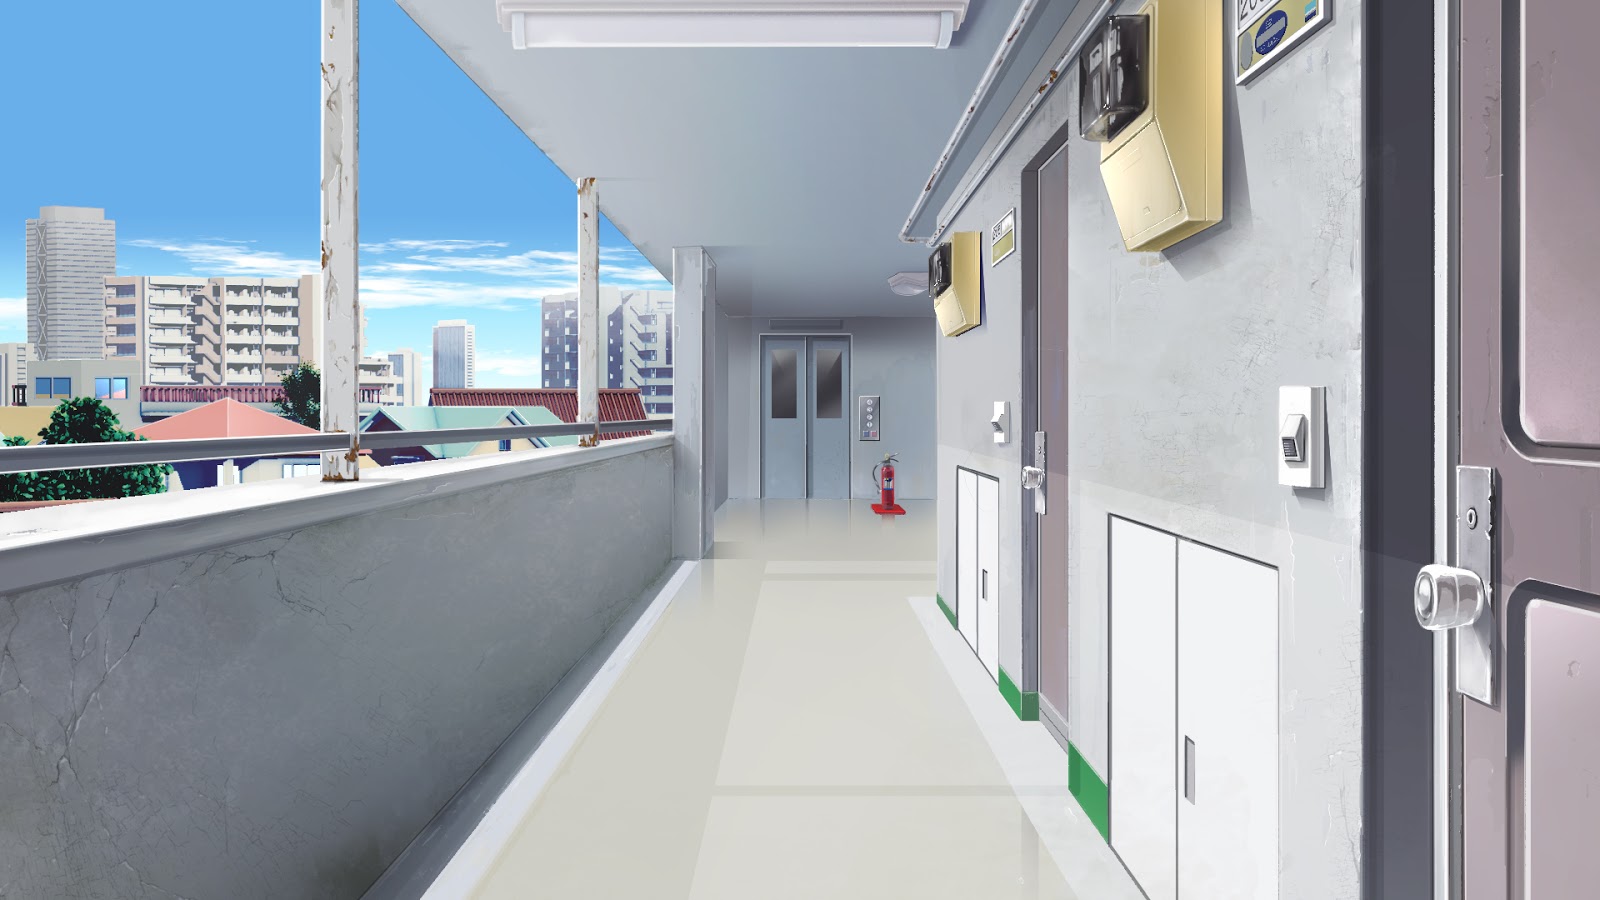 Anime Room Background Images  Free Download on Freepik